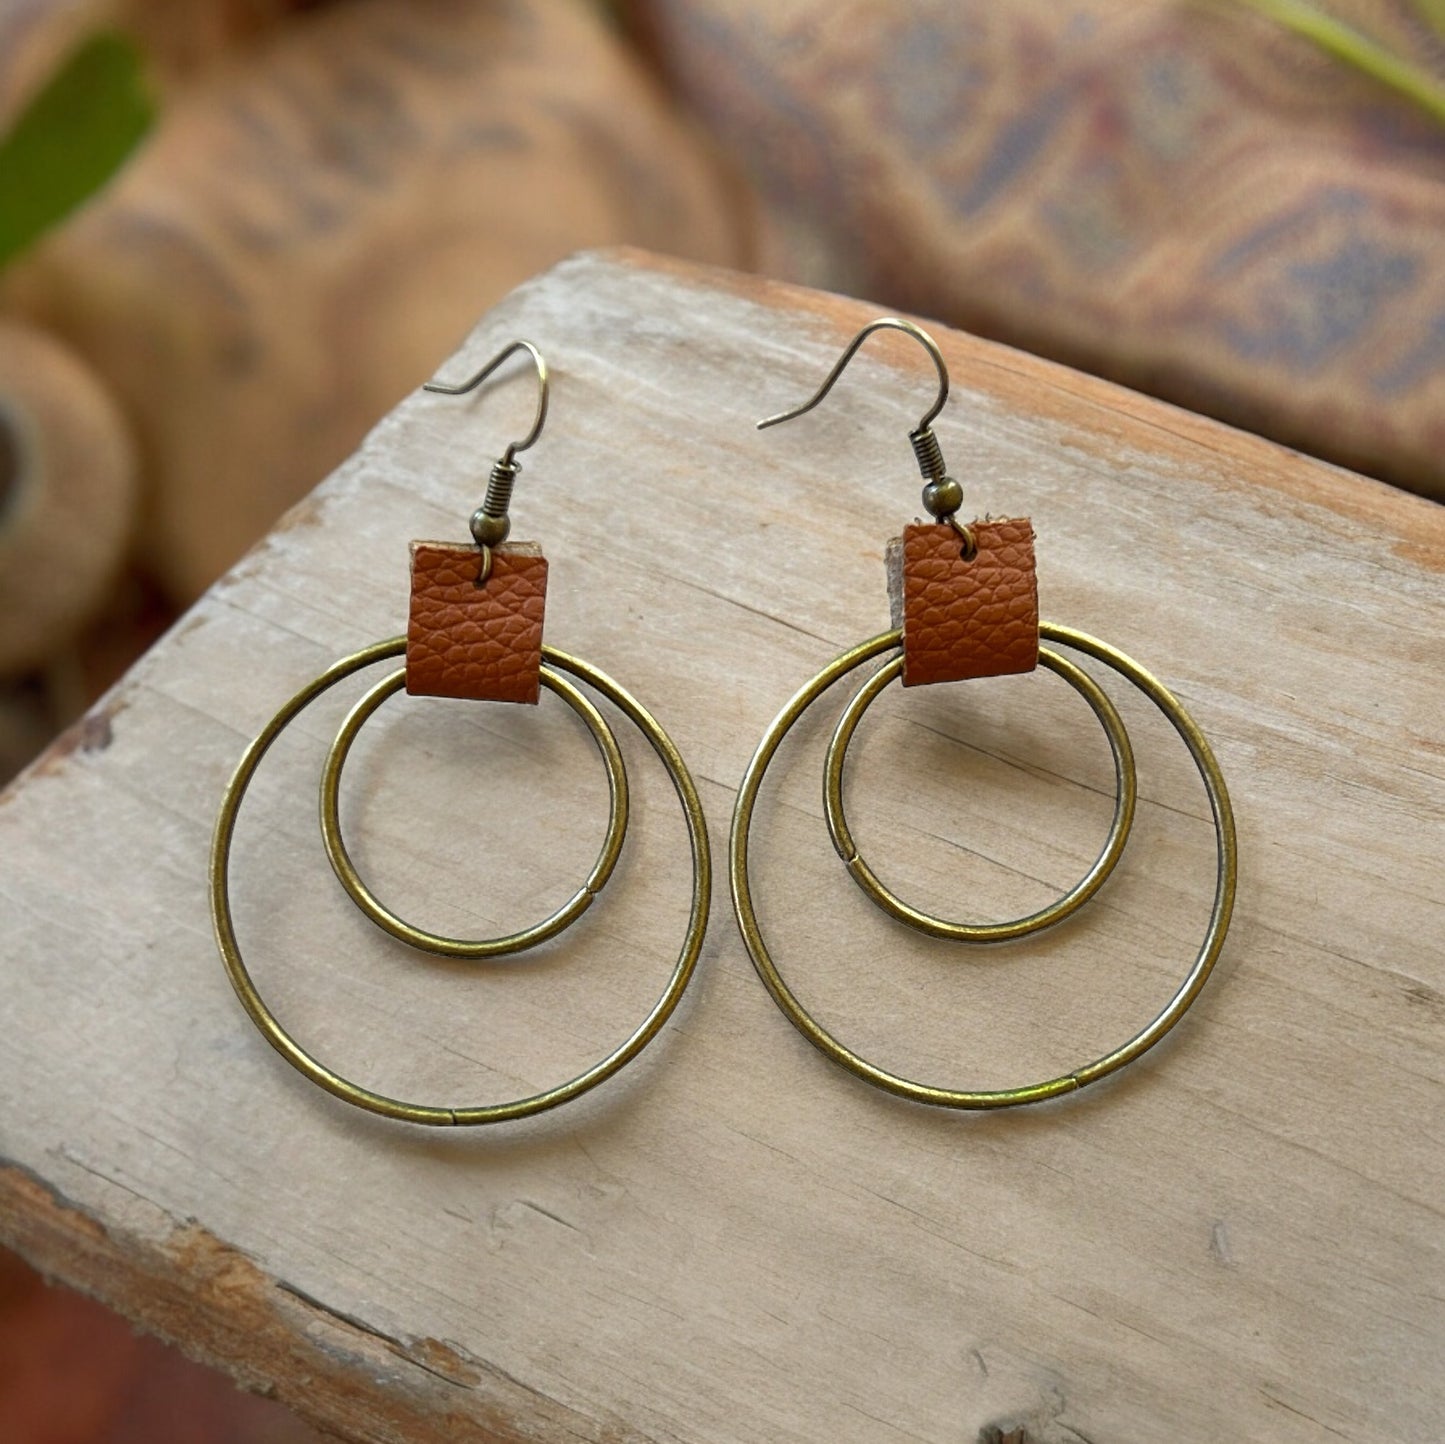 Leather & Brass Double Hoop Earrings: Western Boho Chic Accessories